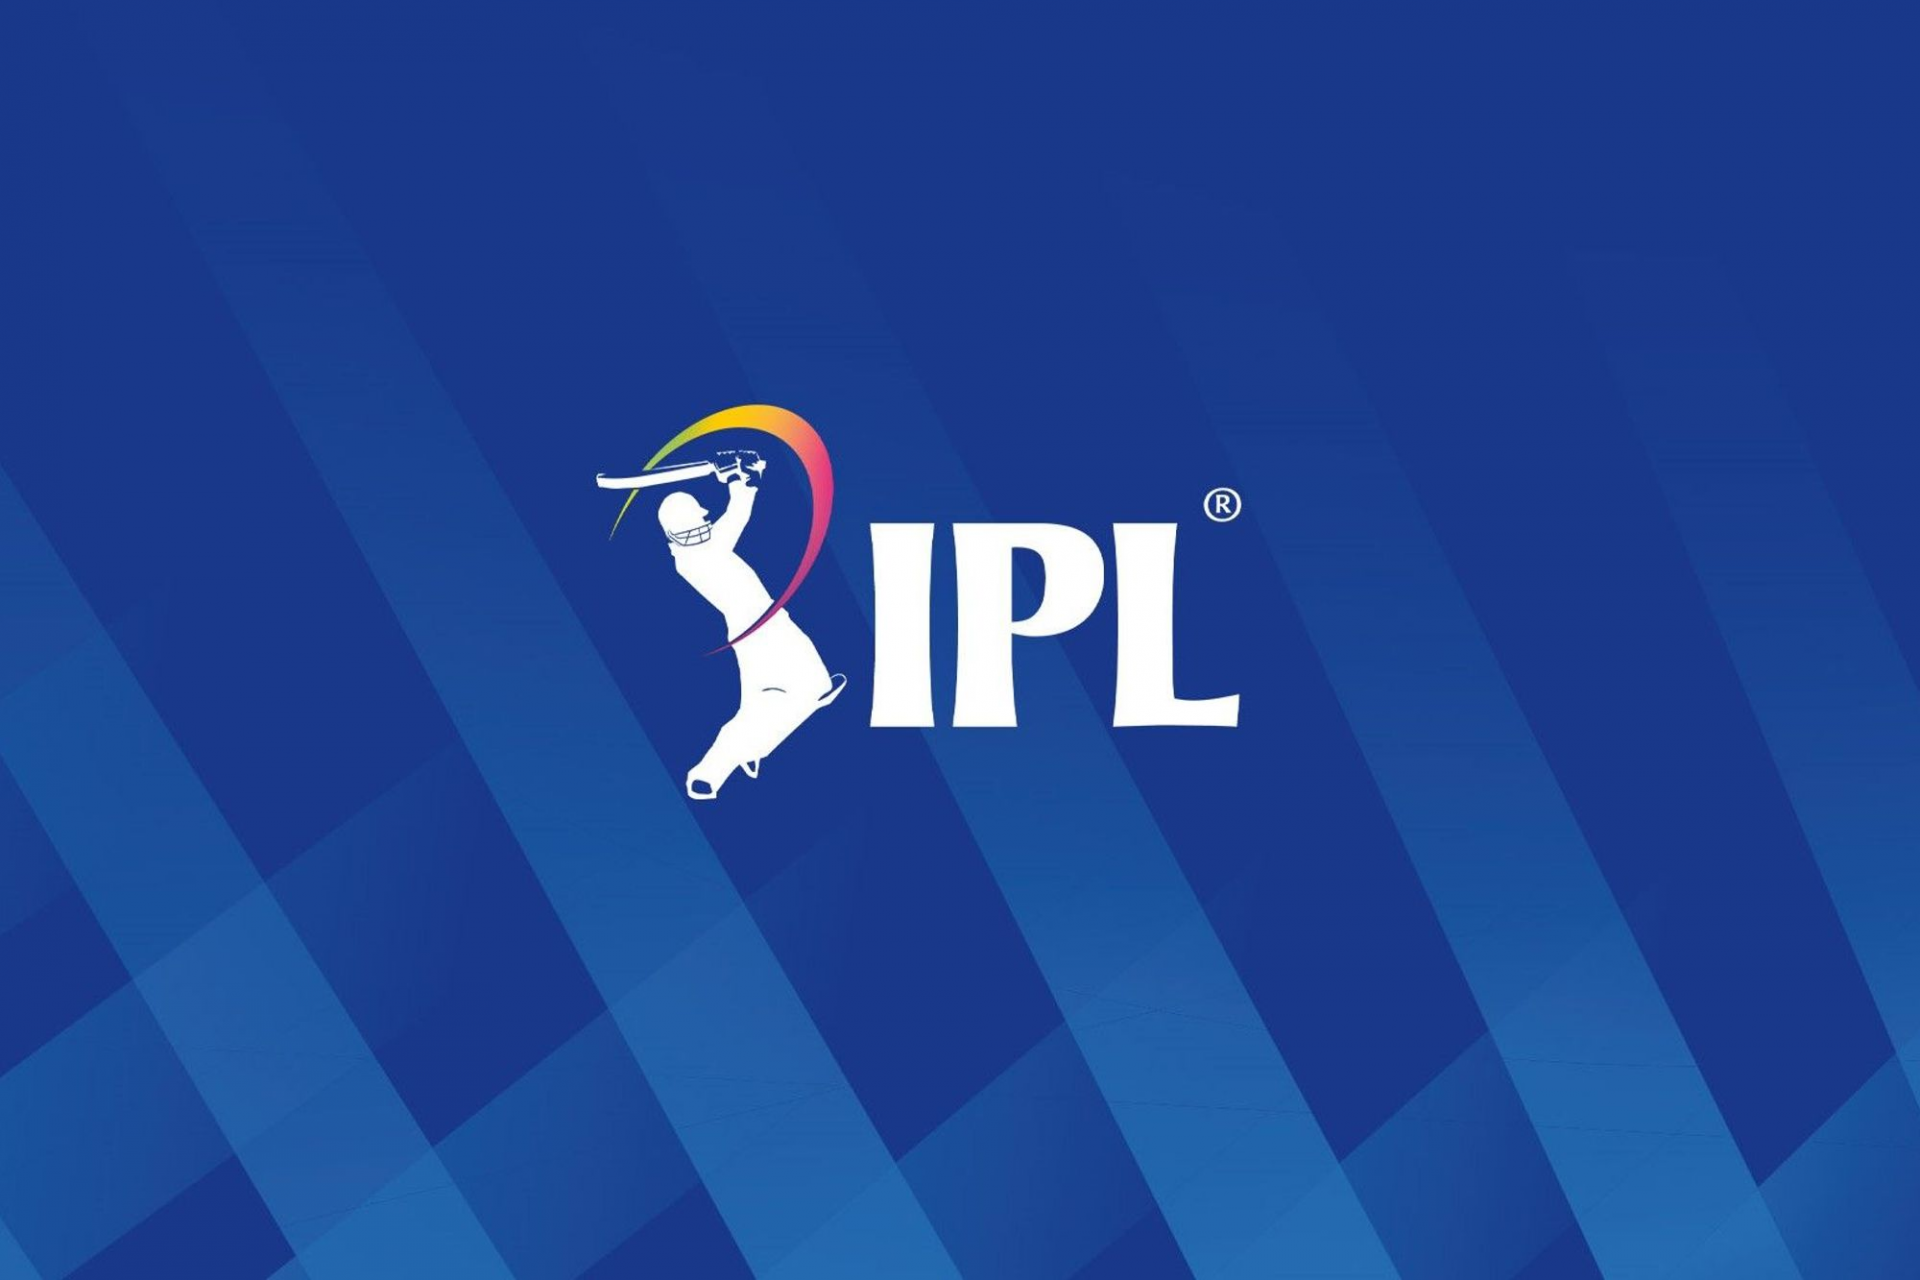 How To Watch IPL 2021: TV Channels, Live Stream Online, Match Schedule